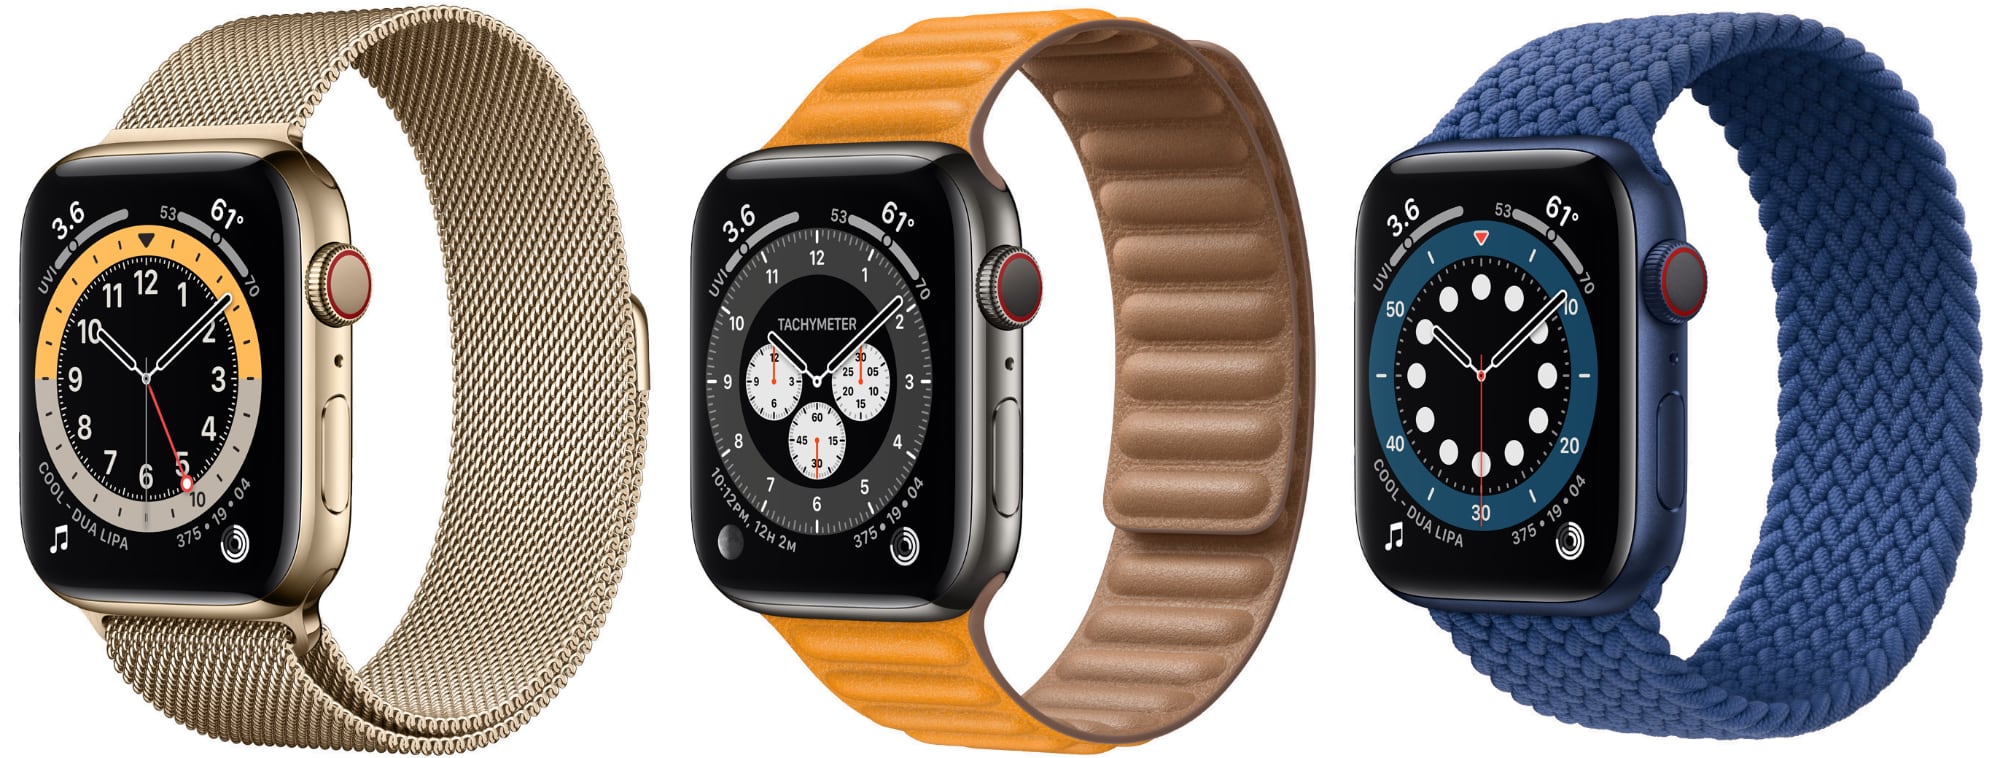 Apple Watch 6: Display & Designed Materials